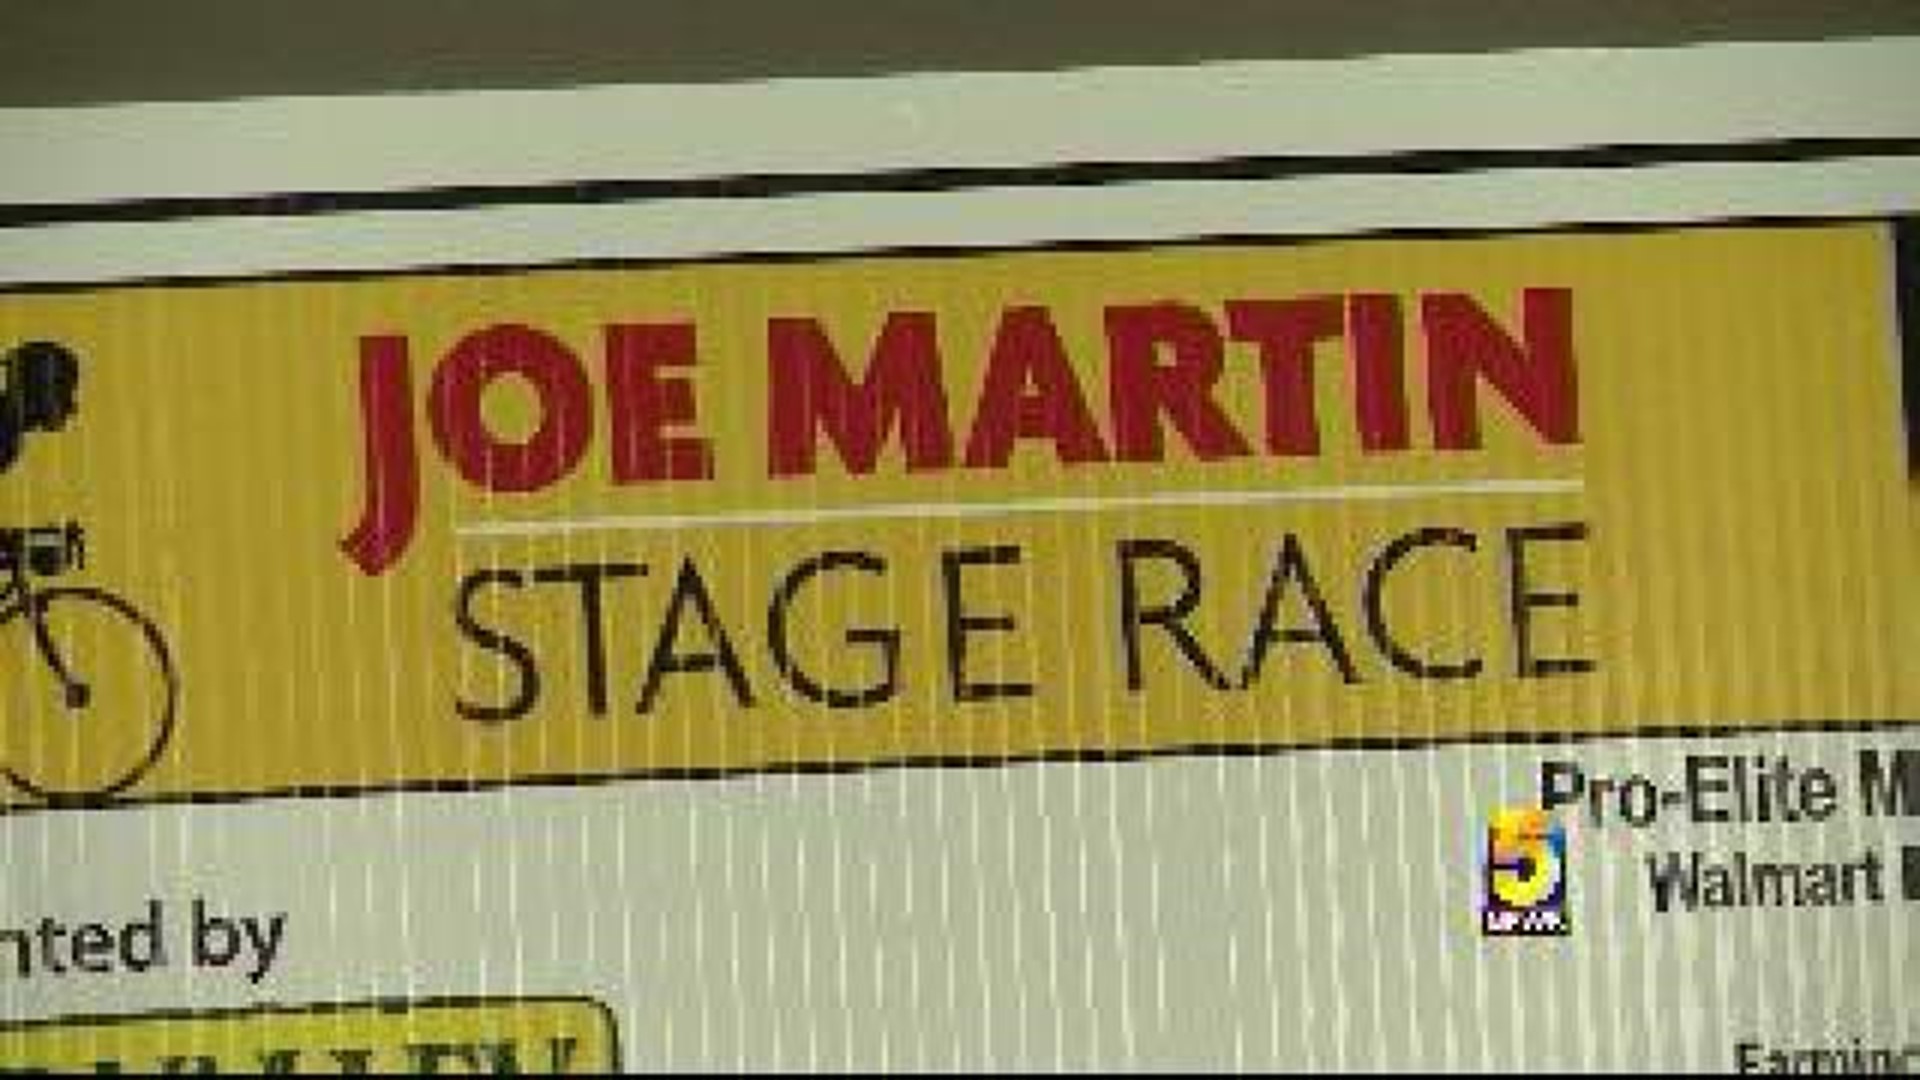 Joe Martin Stage Race